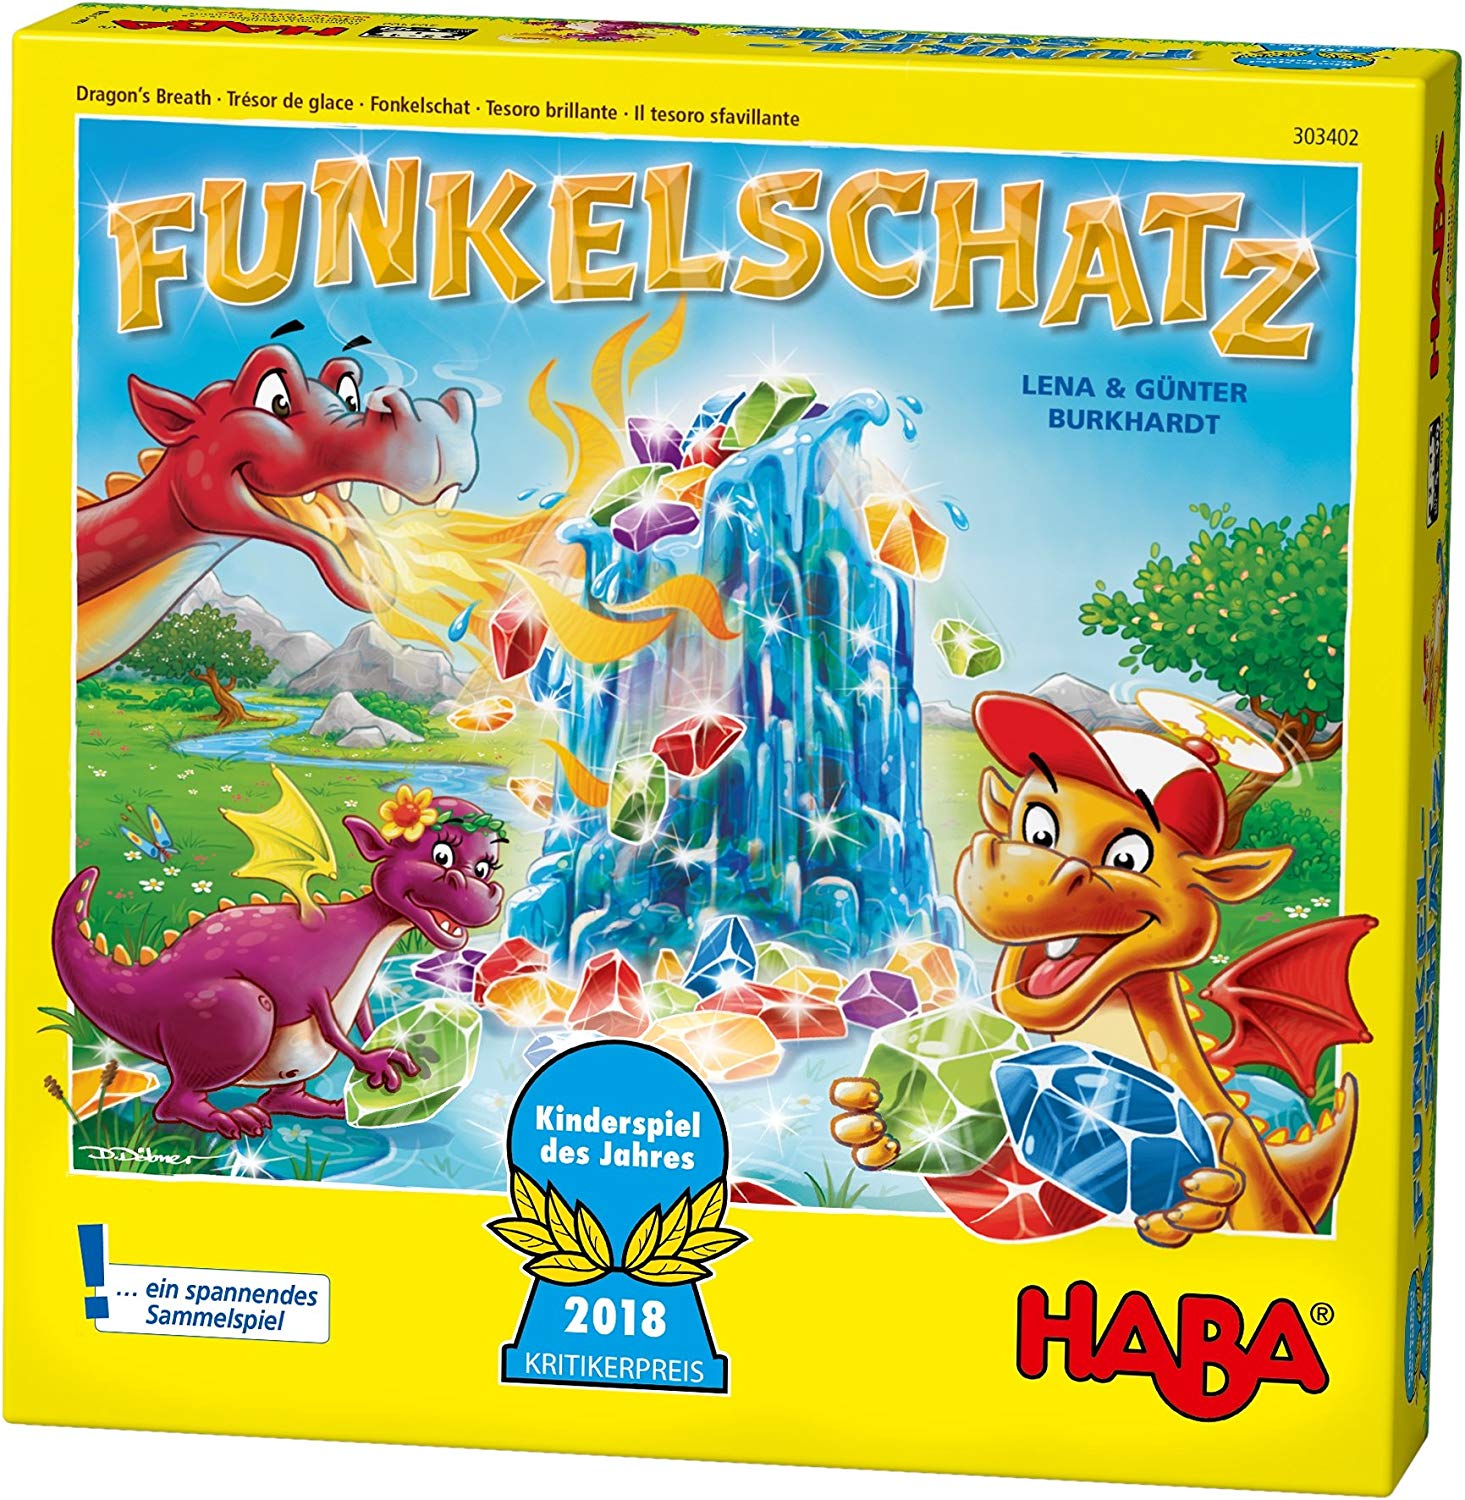 Haba Funkelschatz Board Game